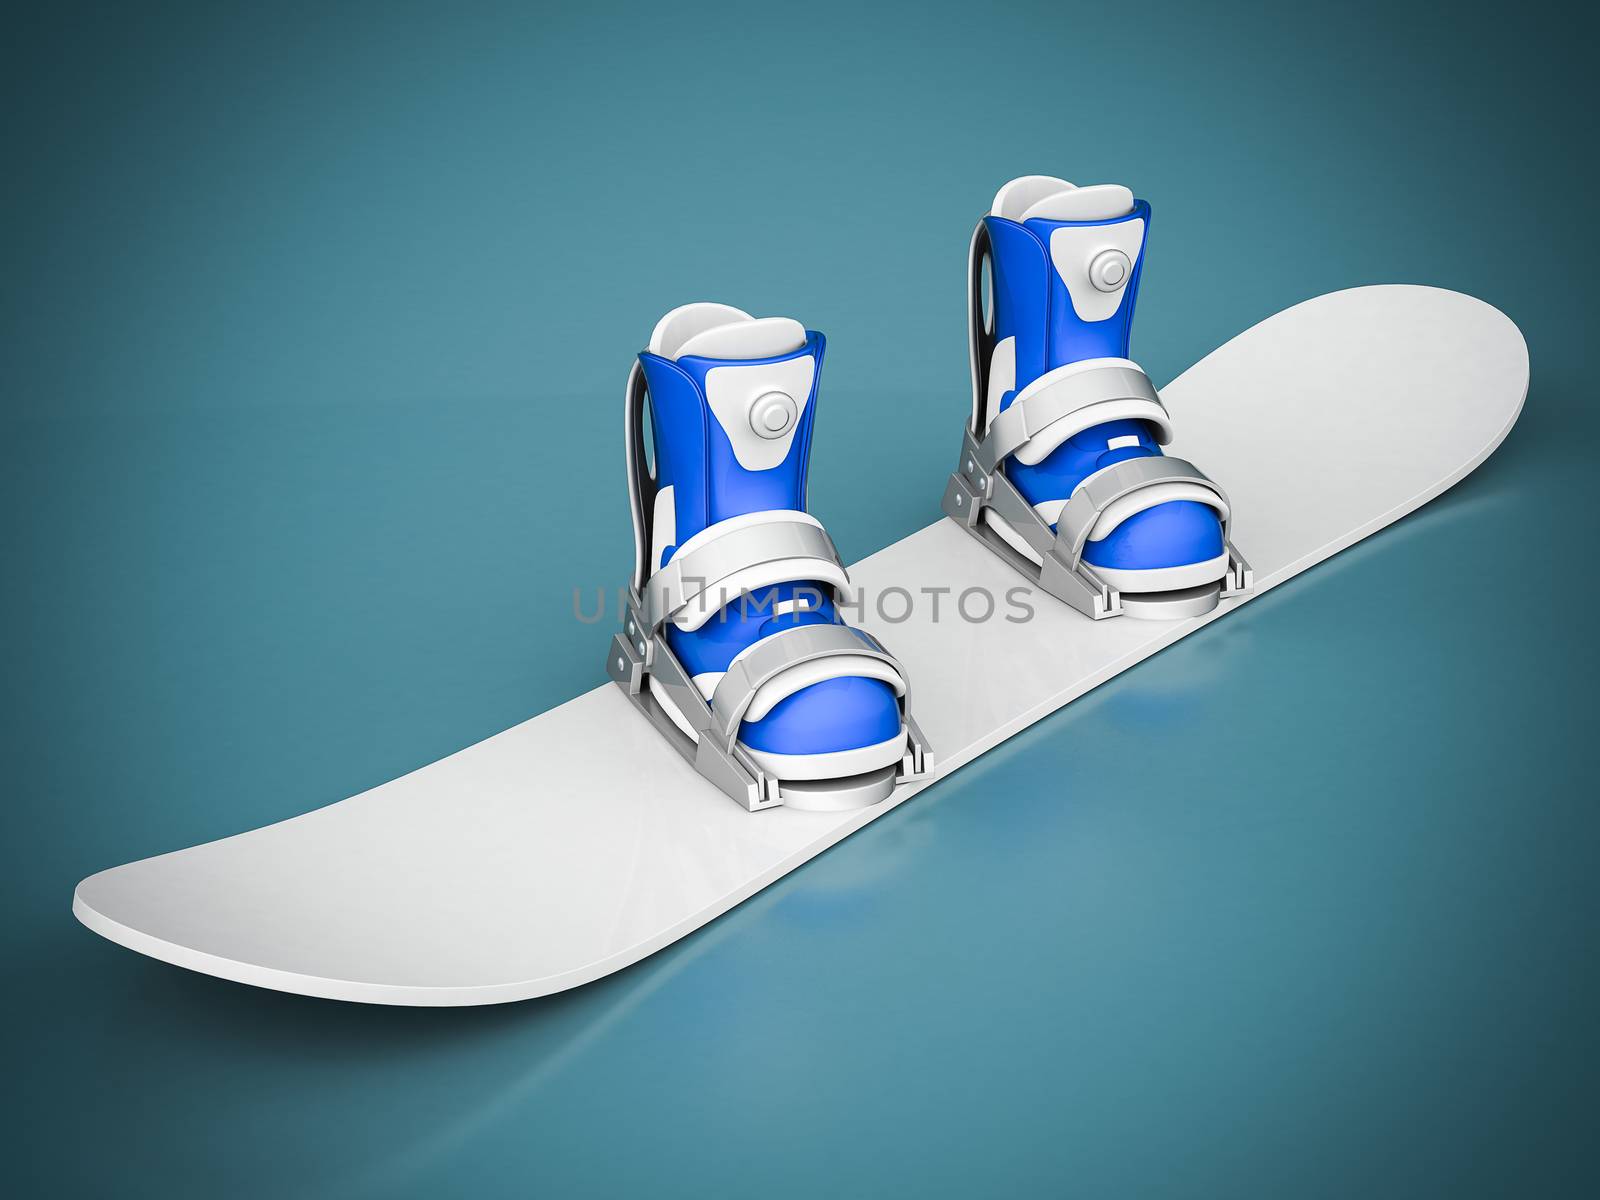 sbeautiful snowboard on a blue background